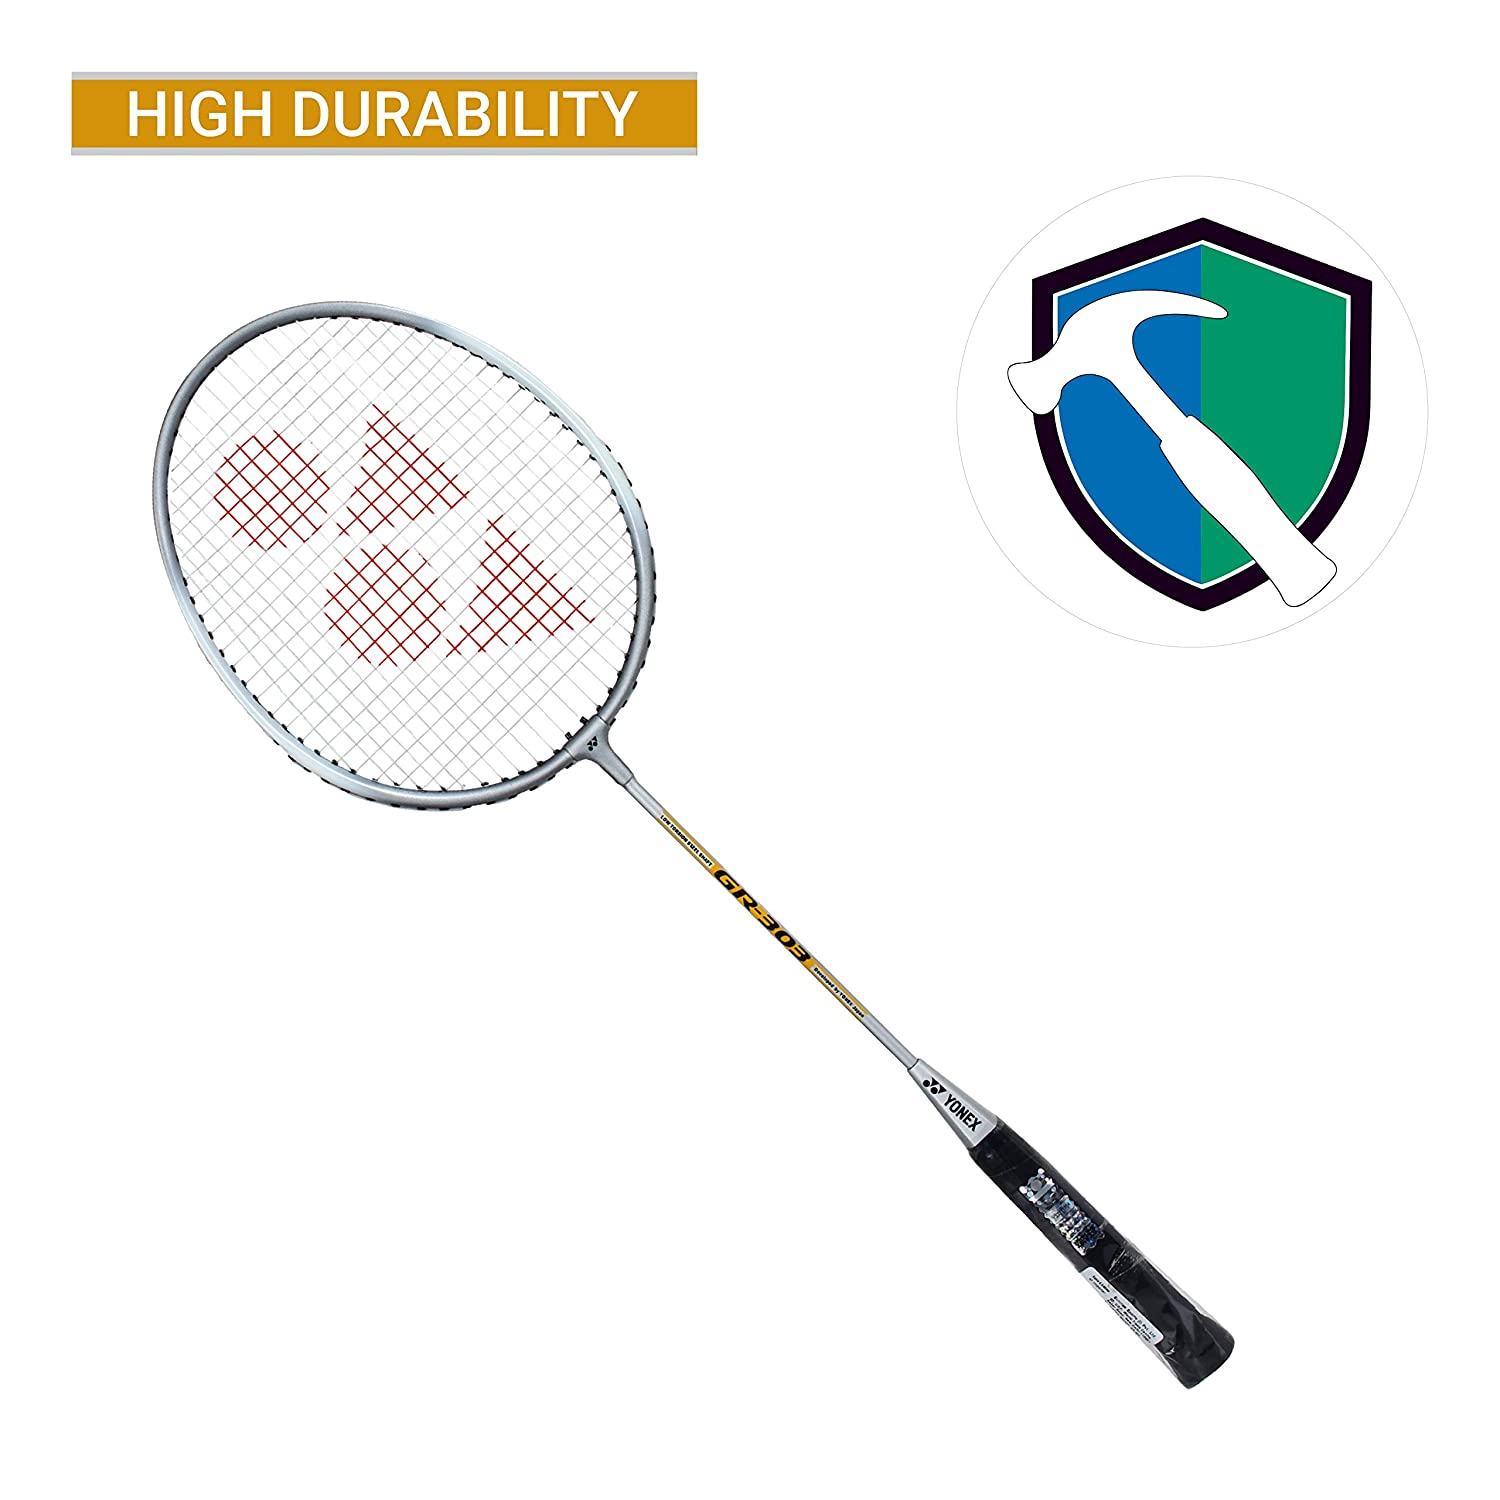 Yonex GR 303i Badminton Racket (color may vary) sppartos